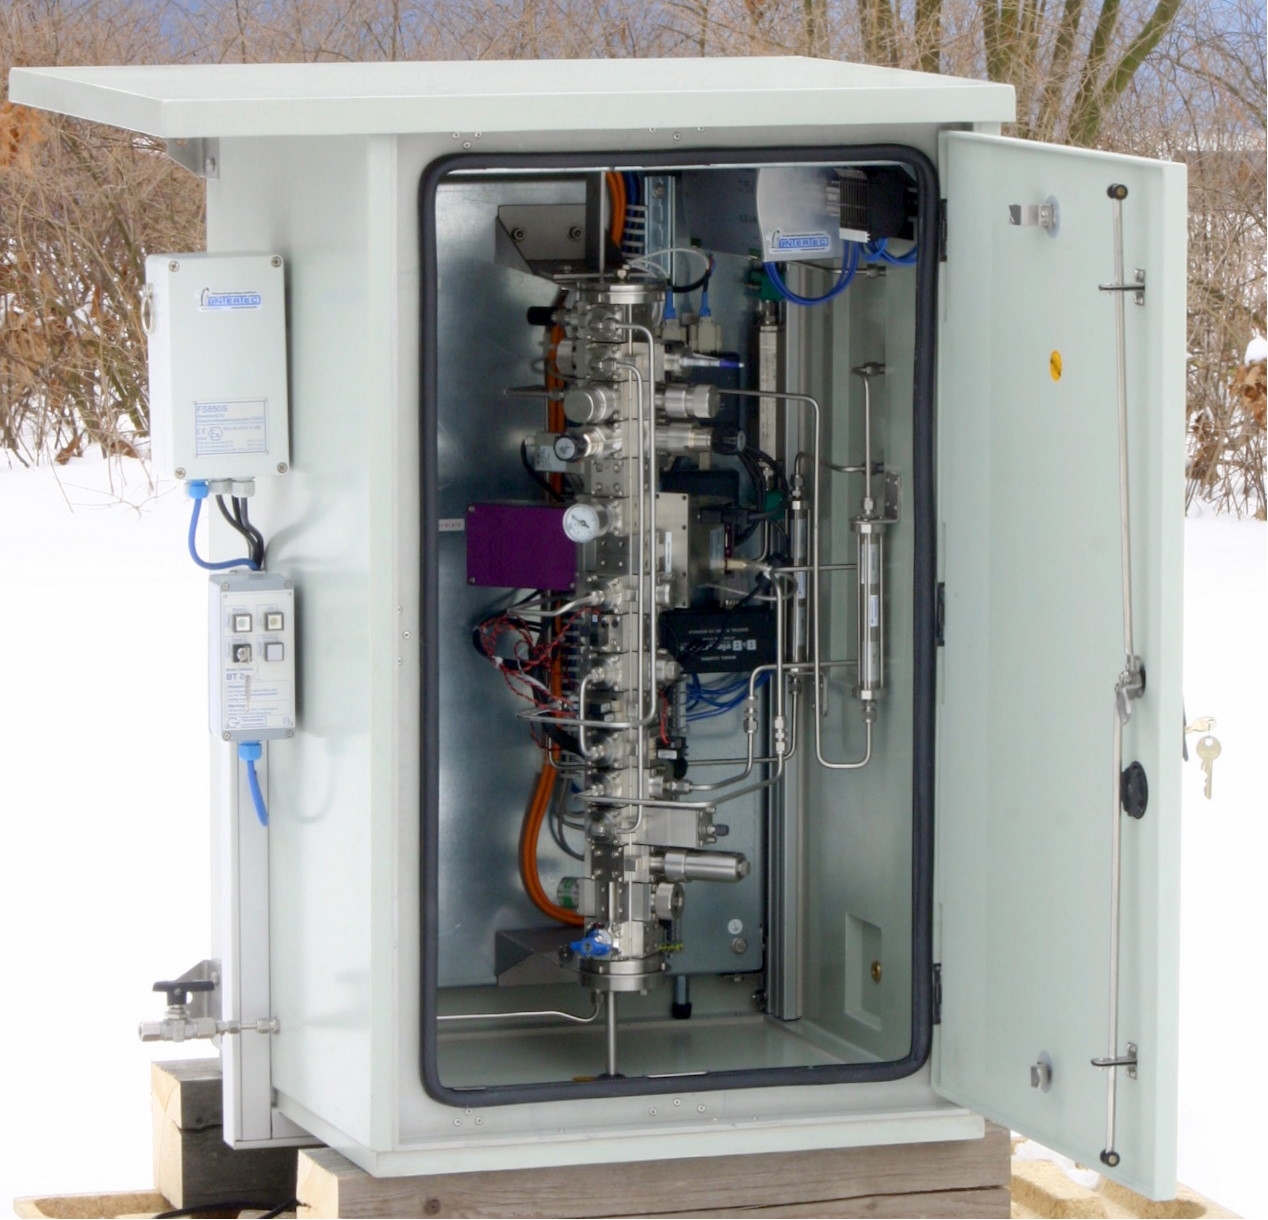 Inert gas system provides explosion-proof solution for installing lab instrumentation ...